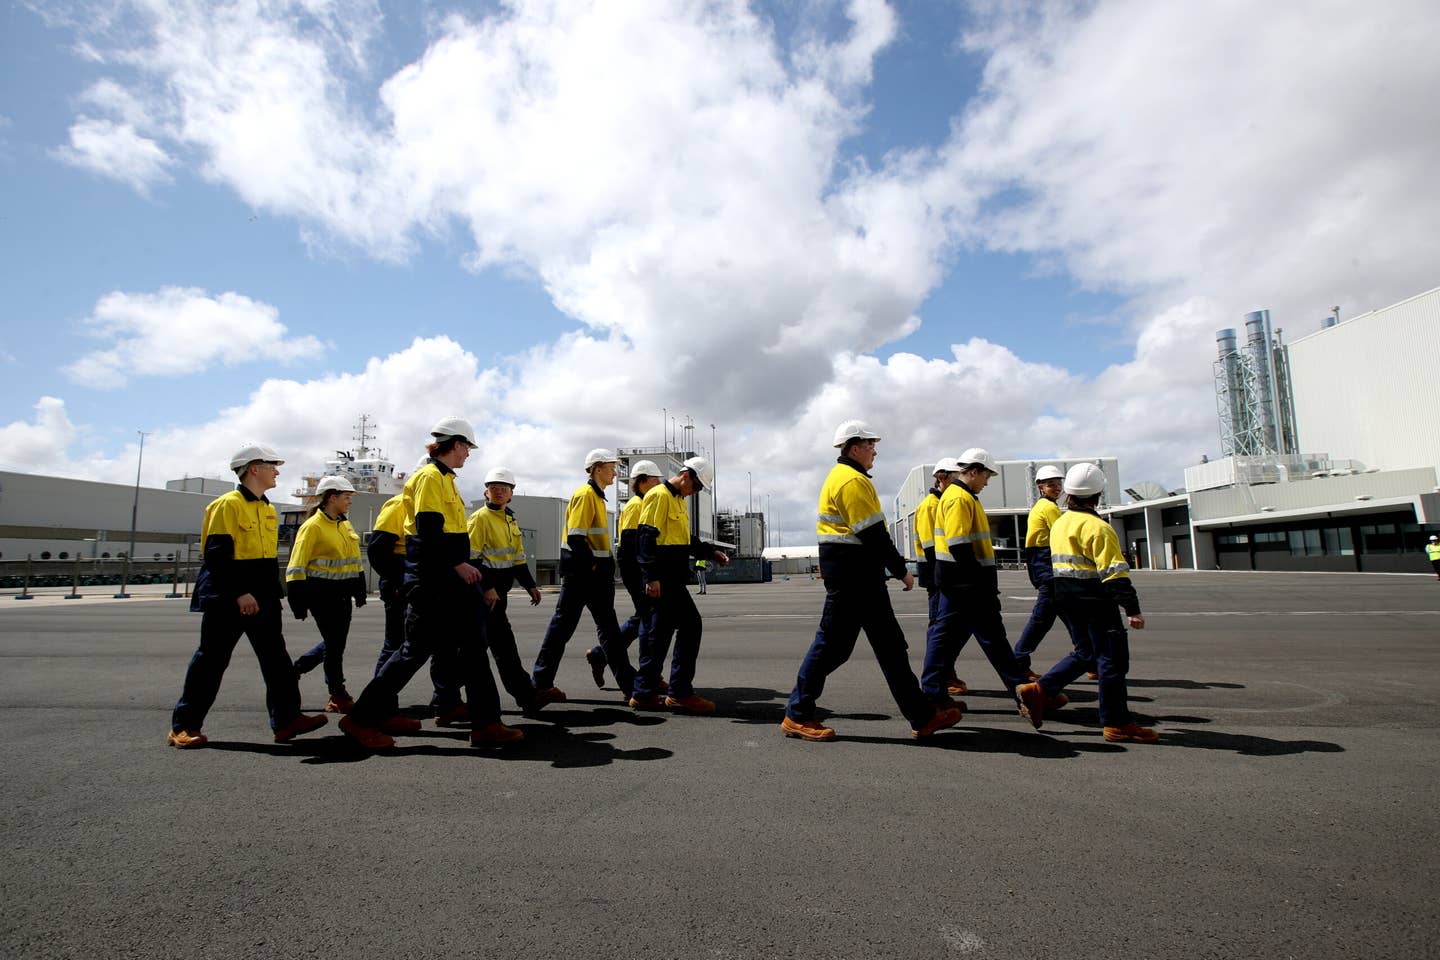 Apprentice shipbuilders walk at Osborne Naval Shipyard during a visit by then-Australian Prime Minister Scott Morrison on Sept. 26, 2020, in Adelaide, Australia. (Photo by Kelly Barnes/Getty Images)